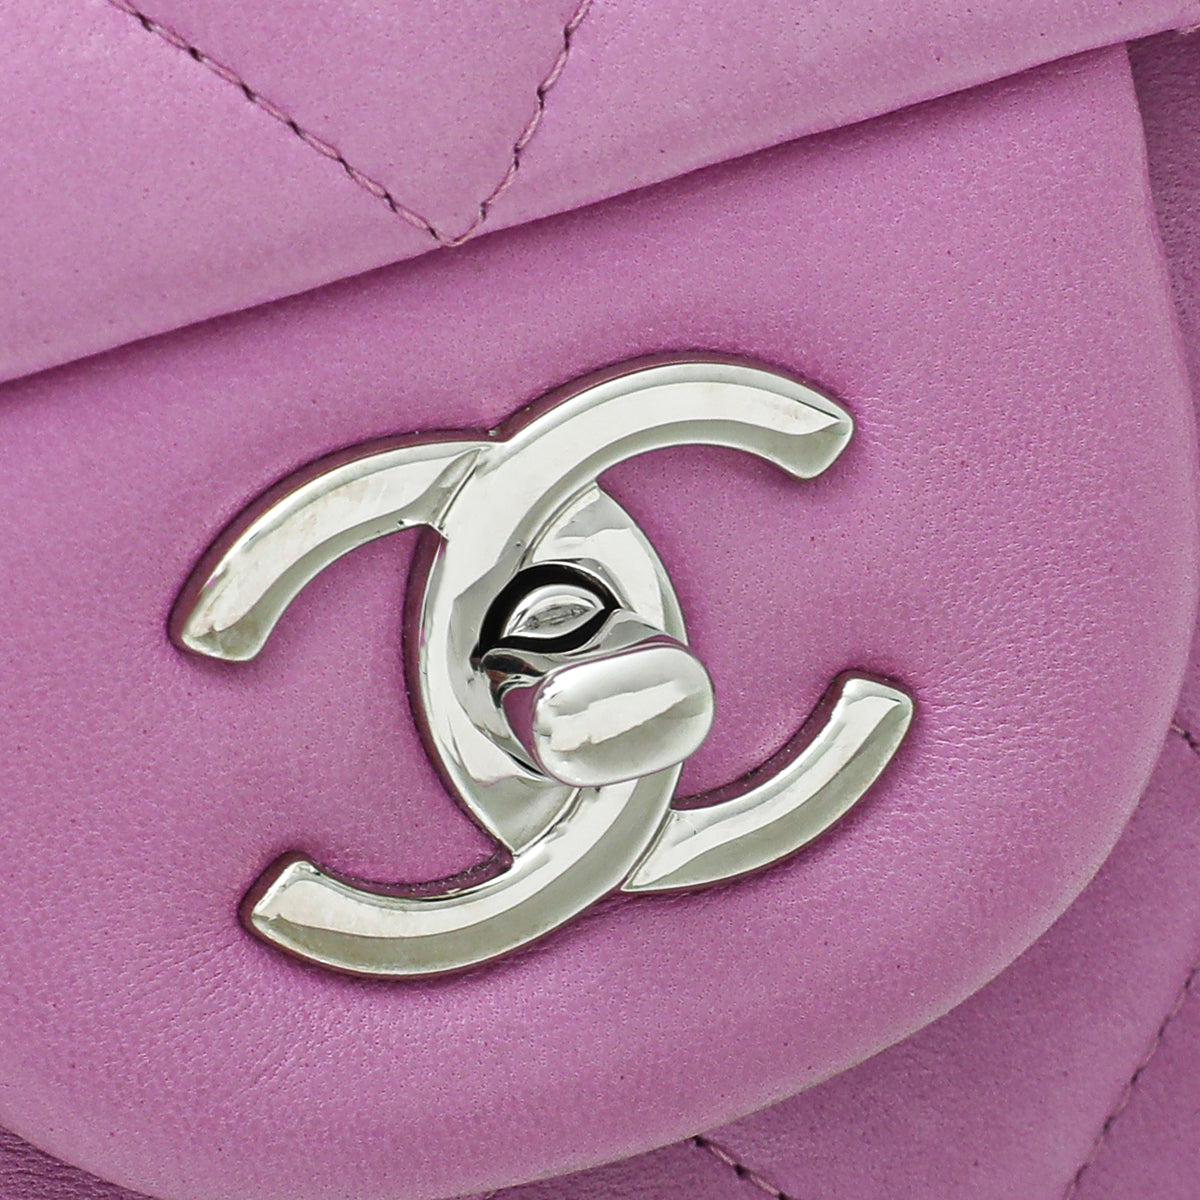 Chanel Mauve CC Classic Double Flap Jumbo Bag